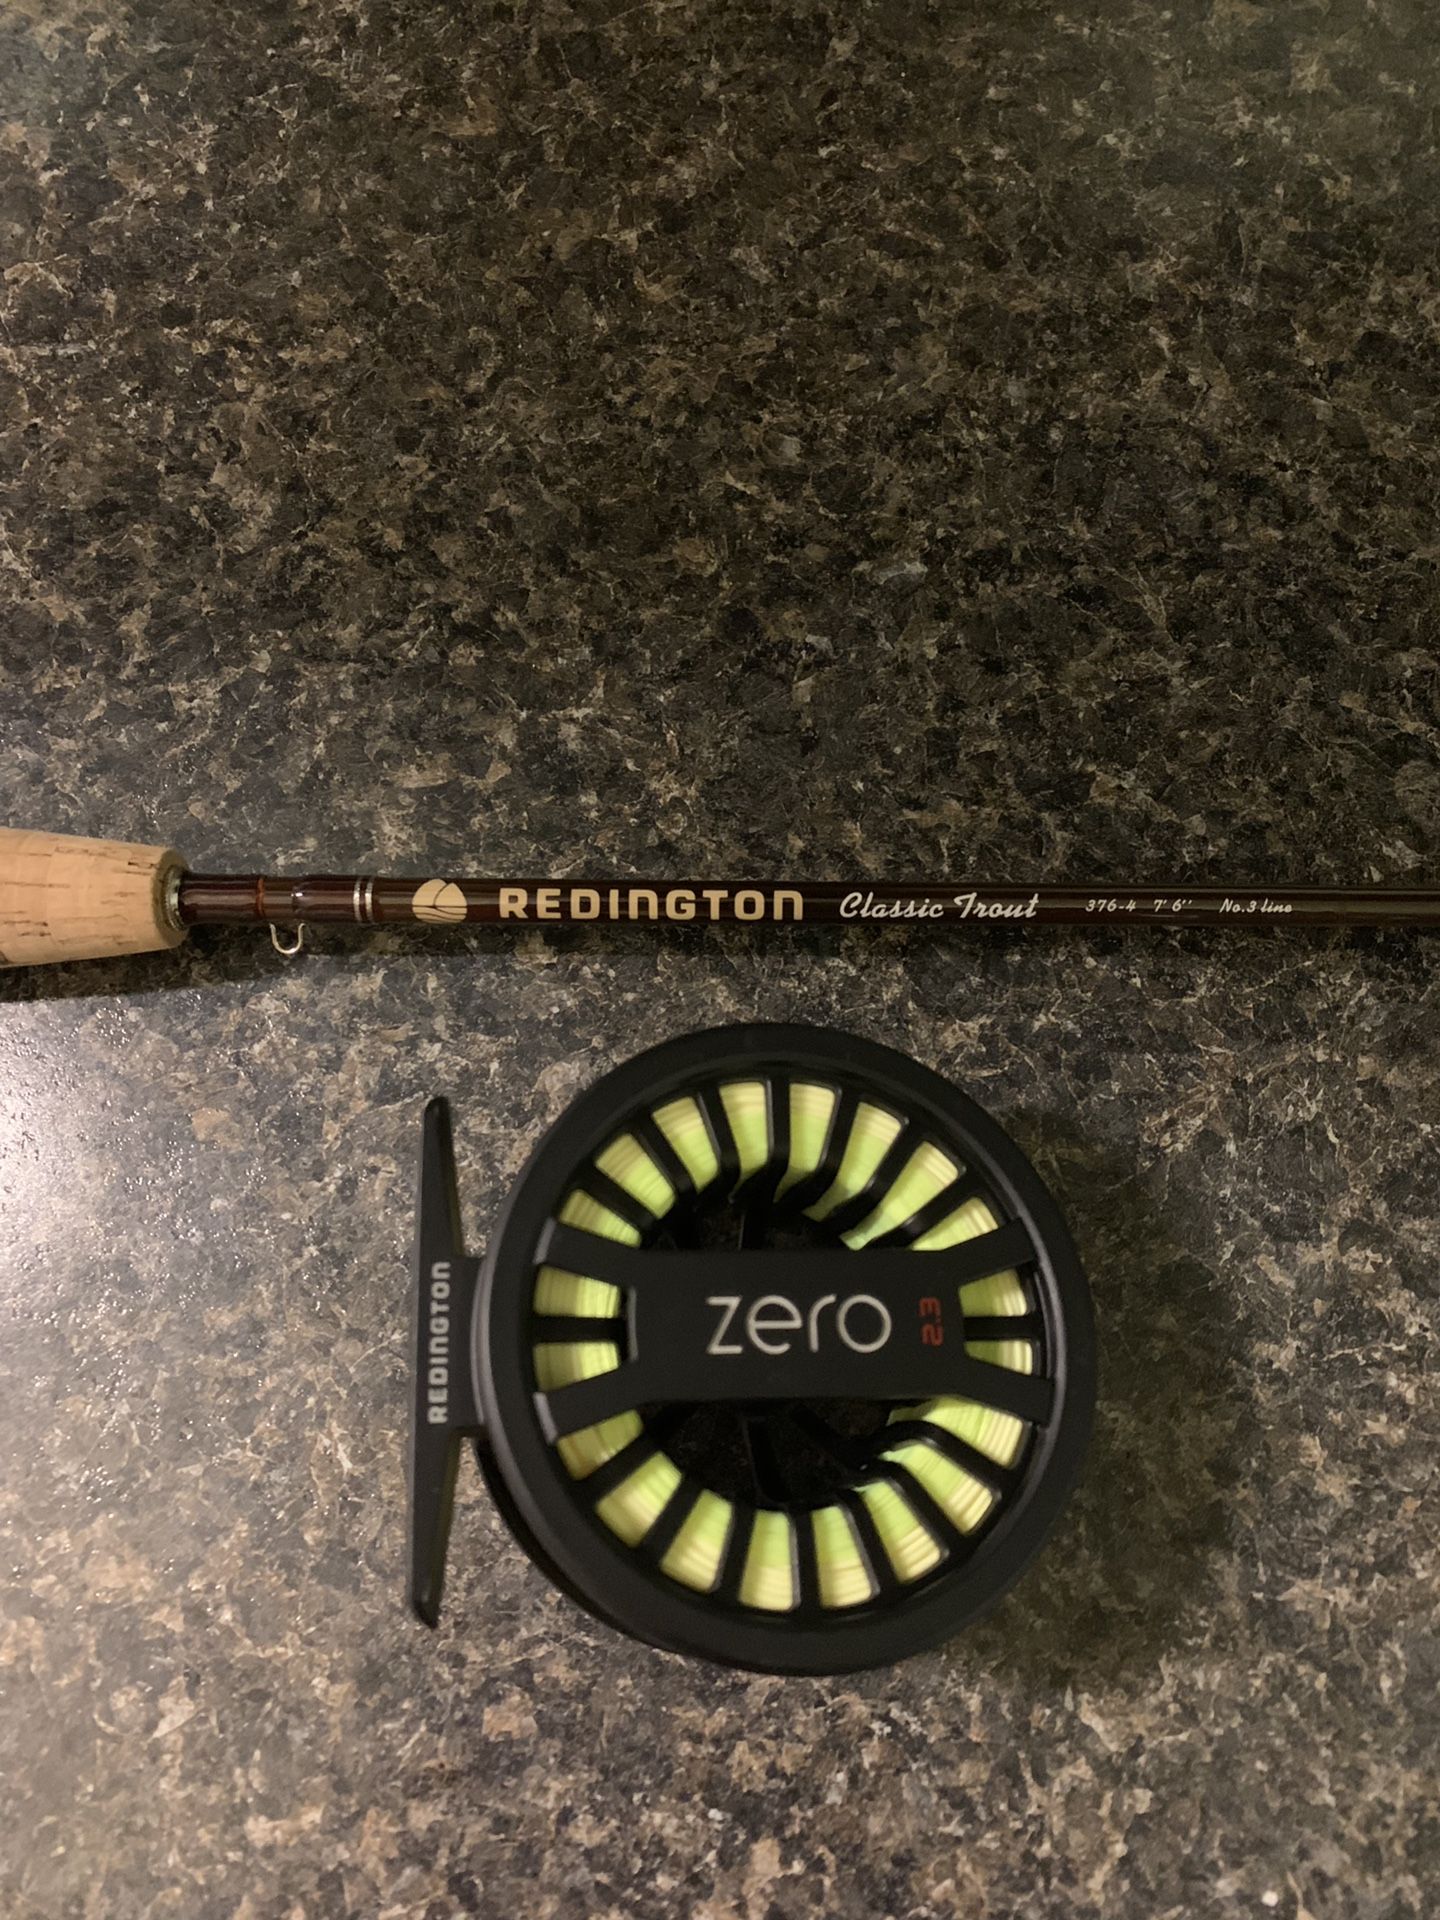 Redington fly rod and reel